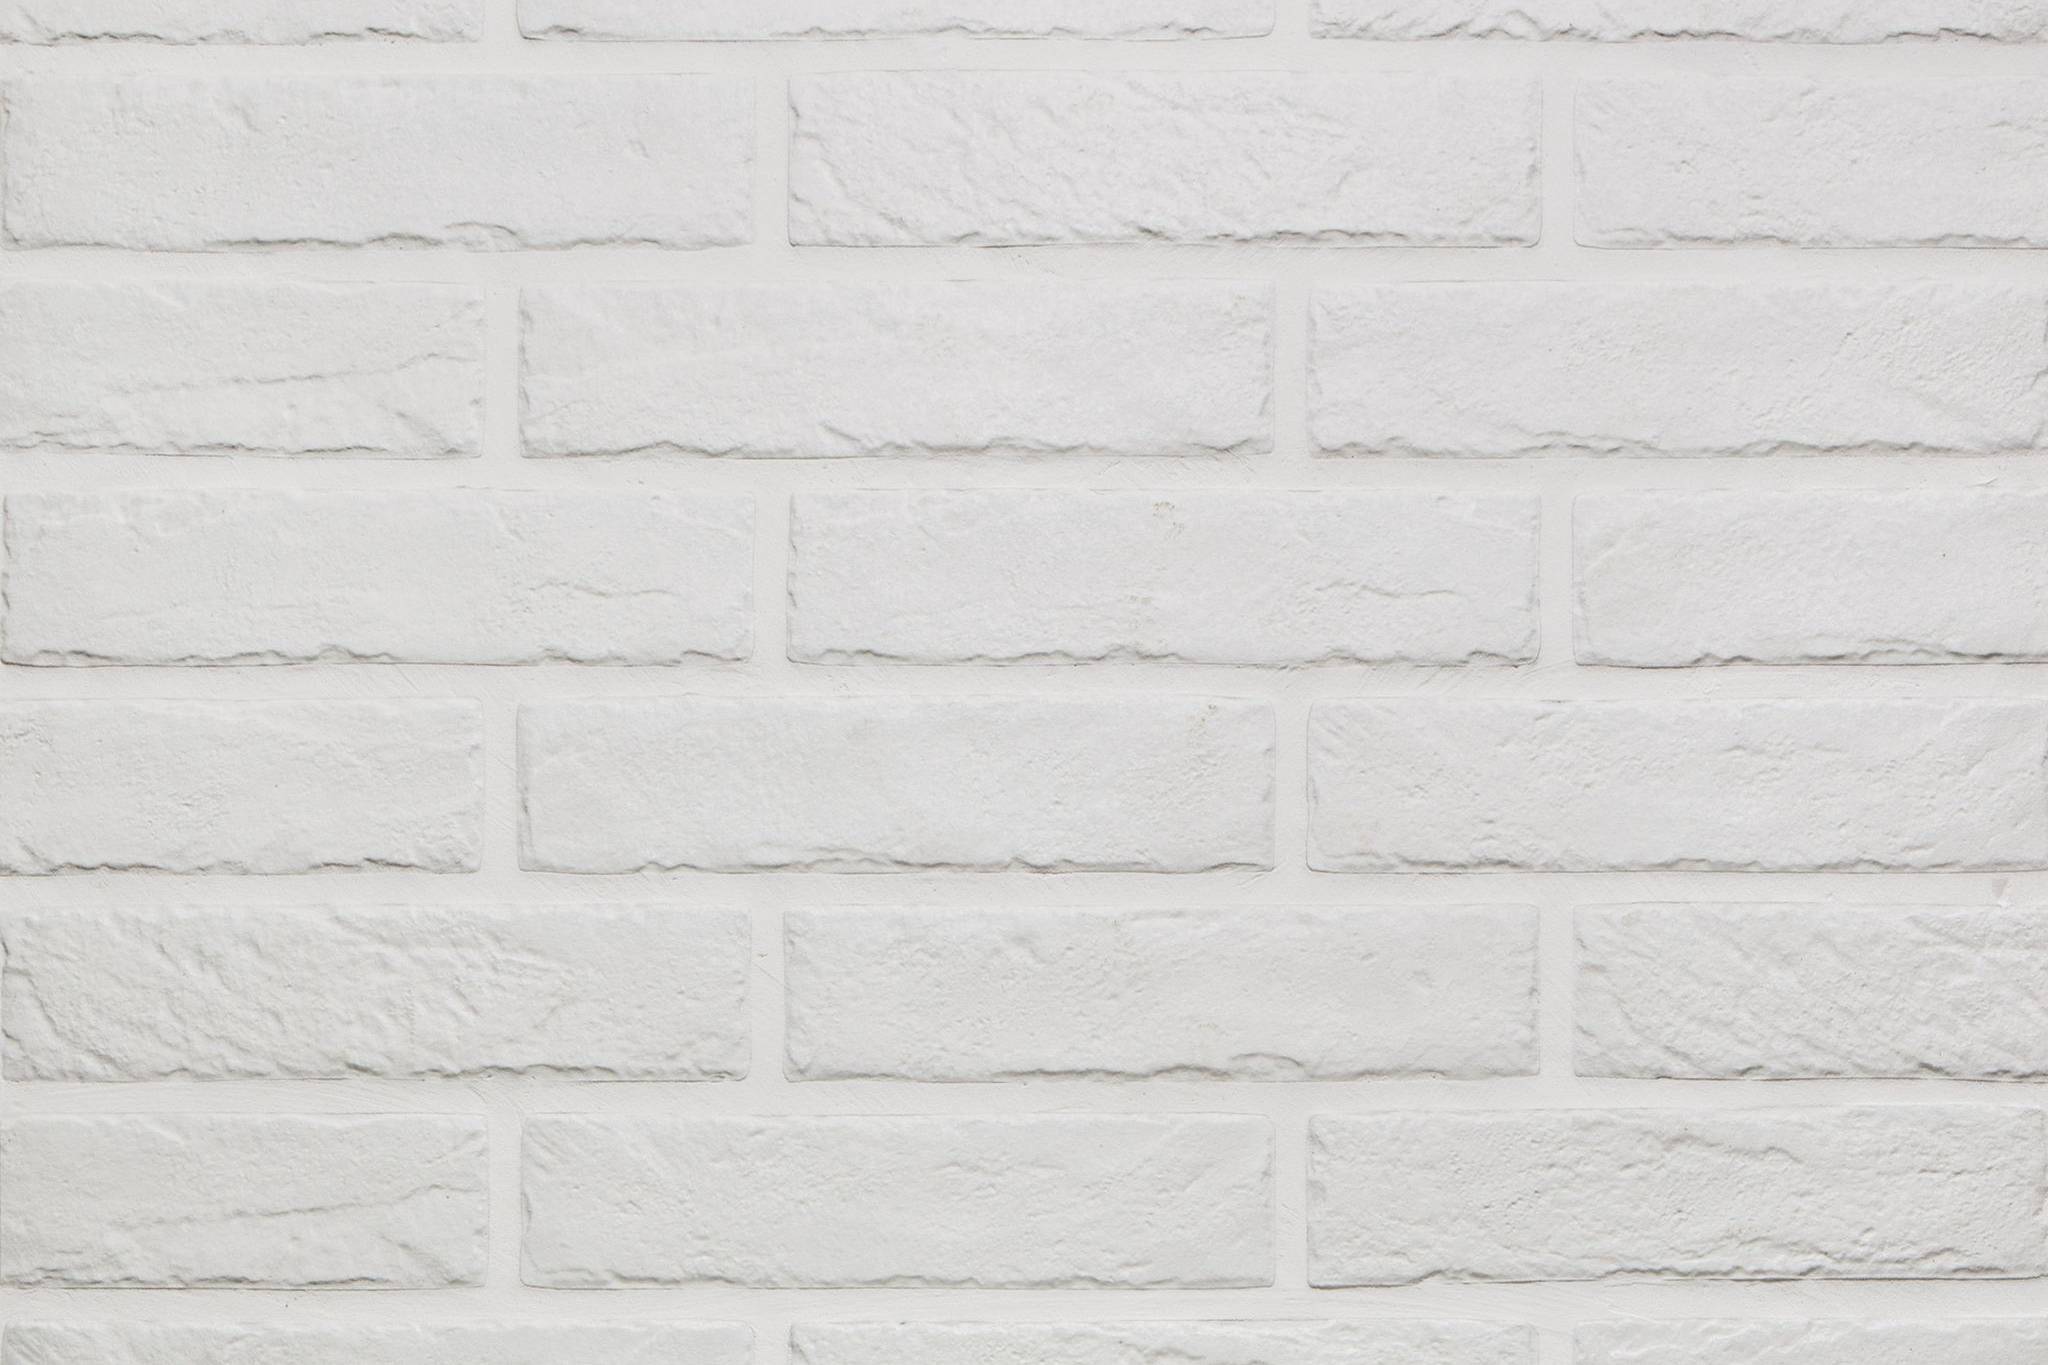 Brix 2x10 White 1 | Qualis Ceramica | Luxury Tile and Vinyl at affordable prices